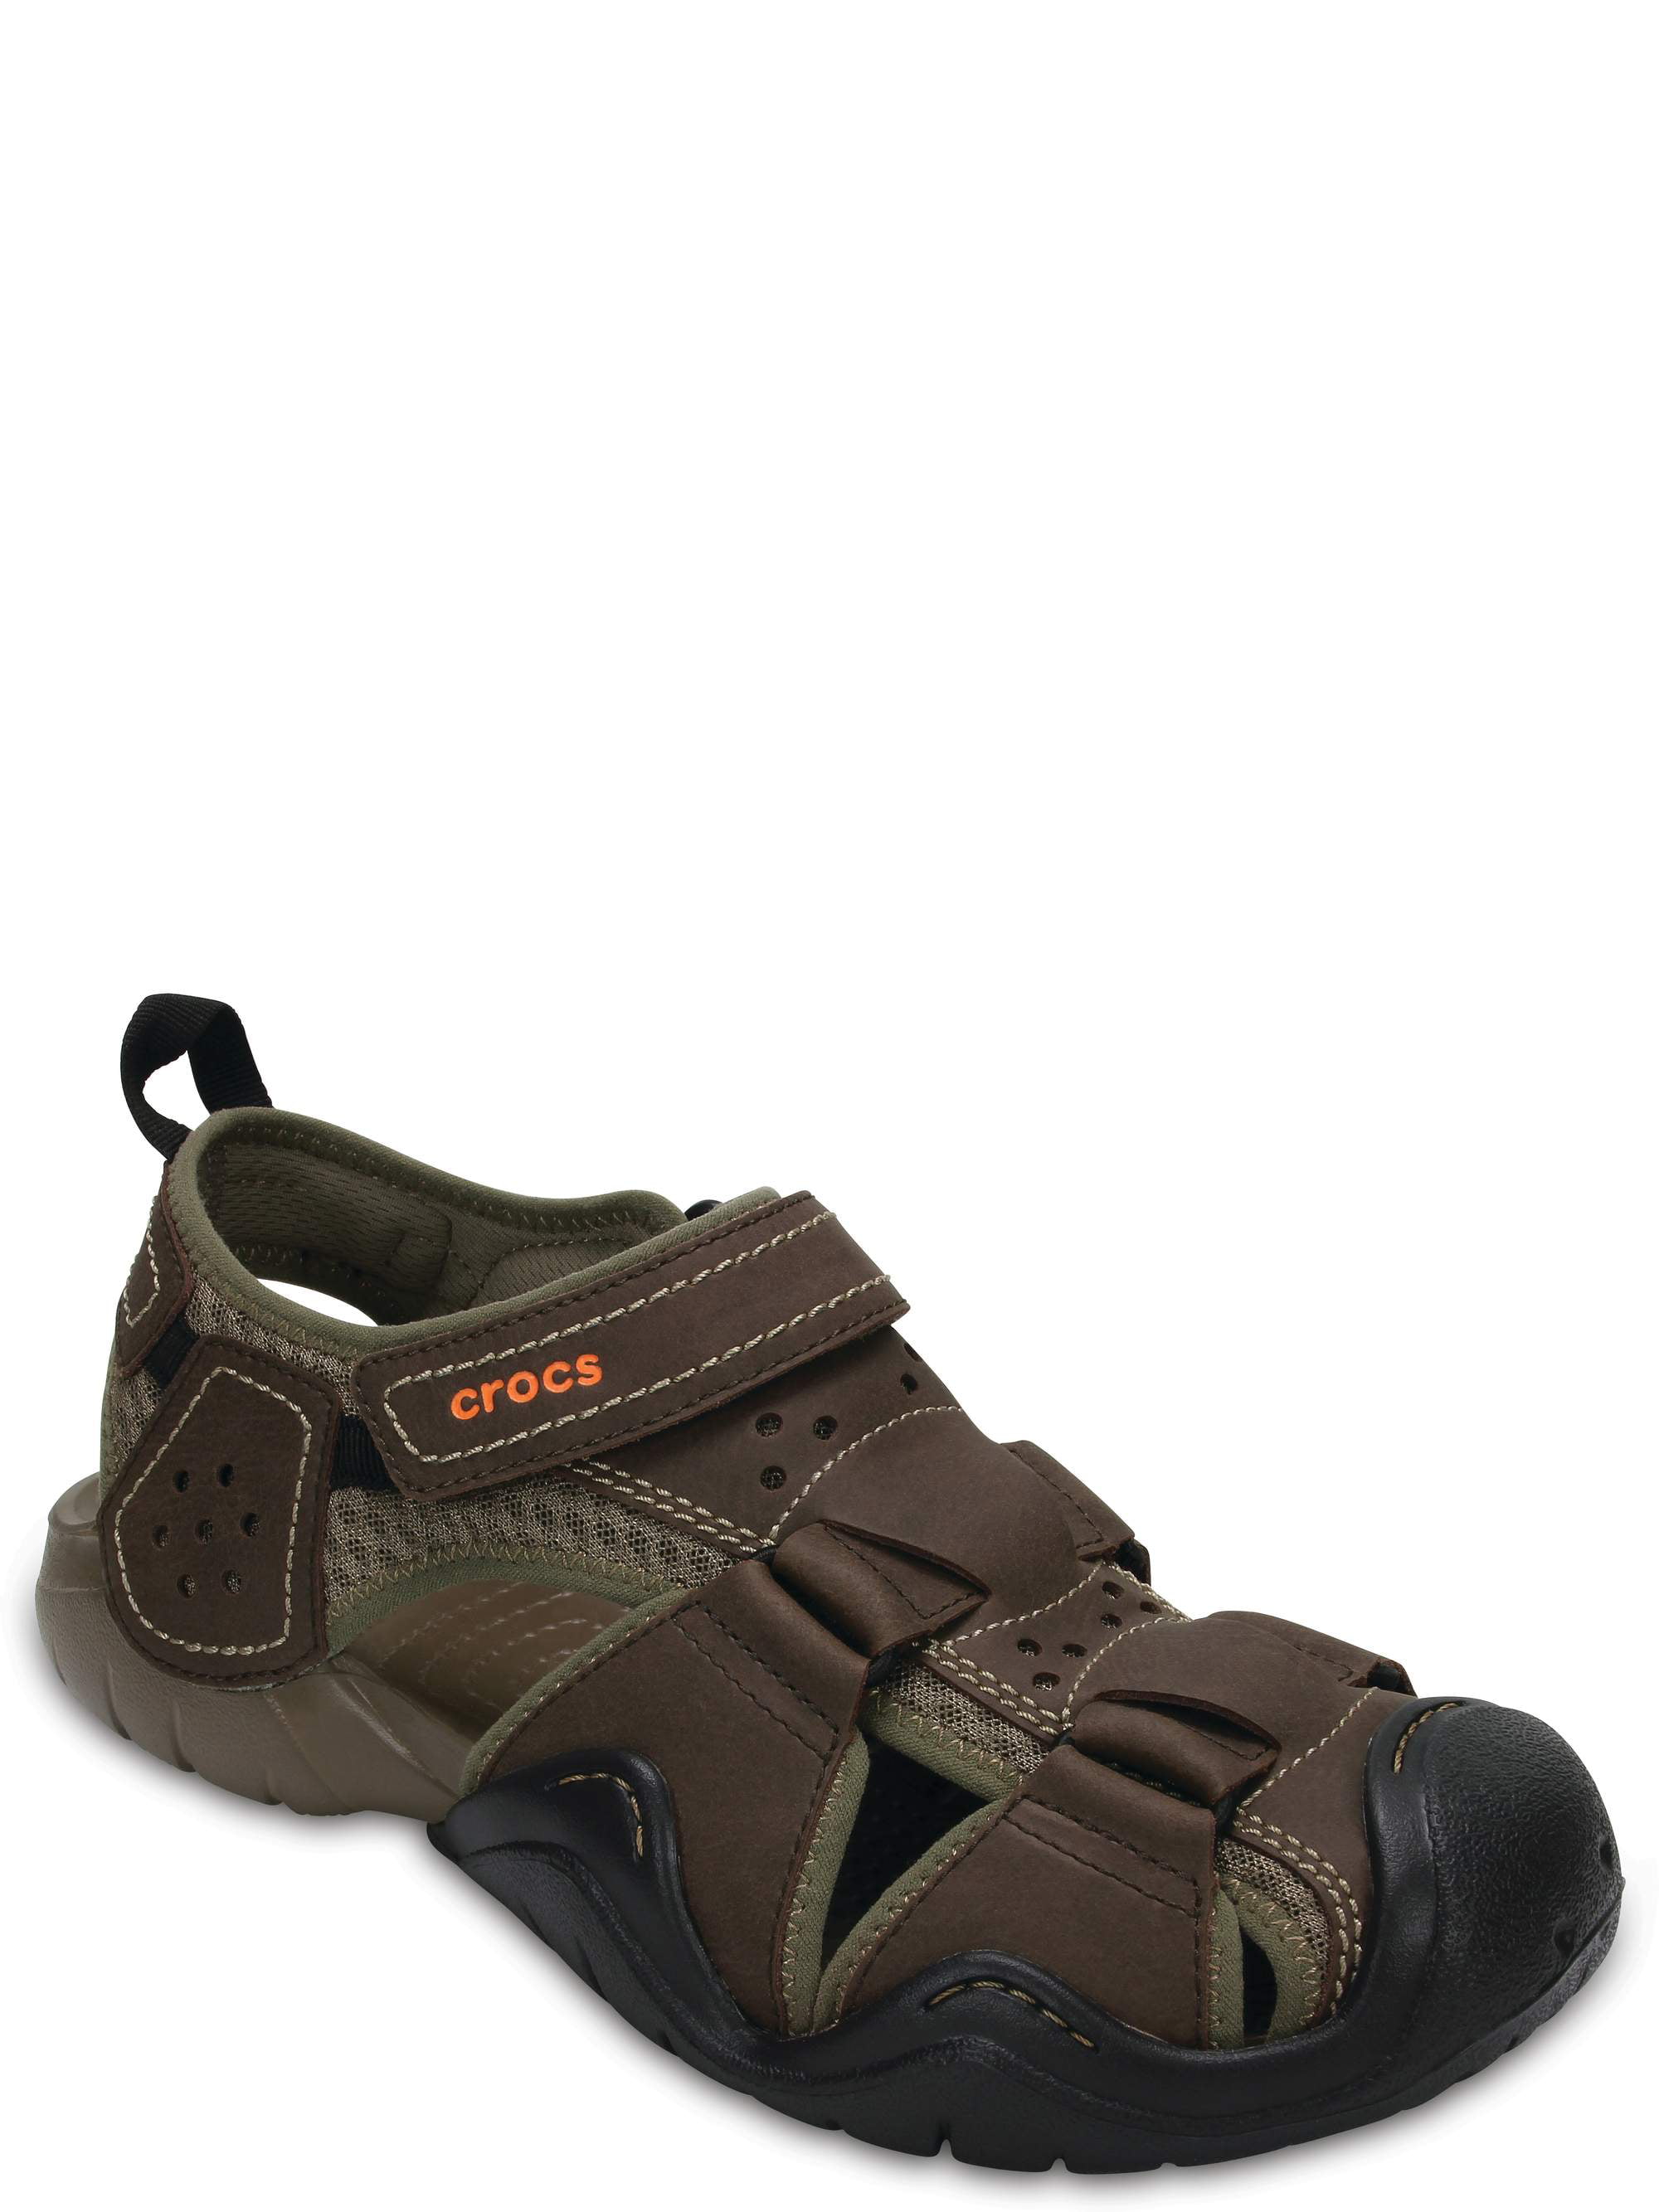 Men's Crocs SWIFTWATER Leather Fisherman Espresso Walnut Rugged Sandals Shoes 